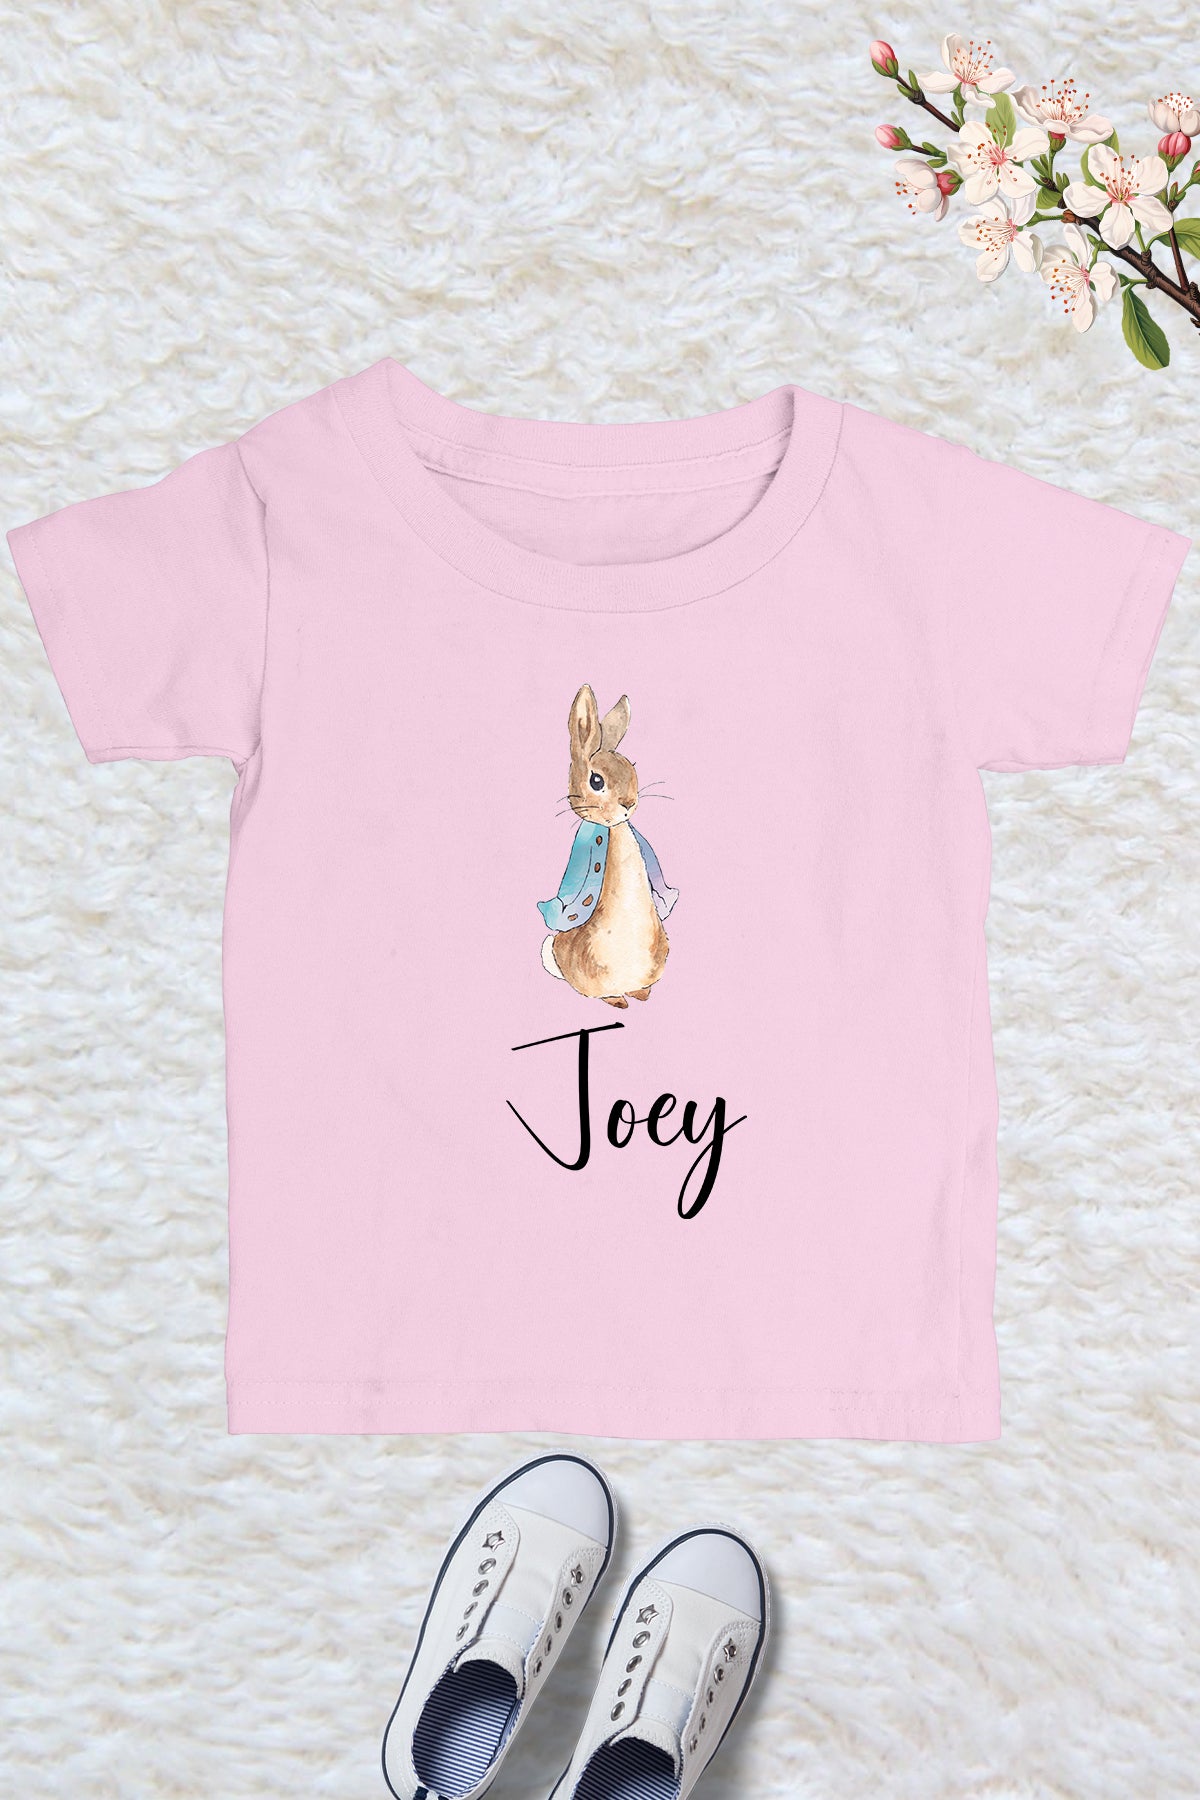 Personalized Rabbit Boy Name Kids T Shirt